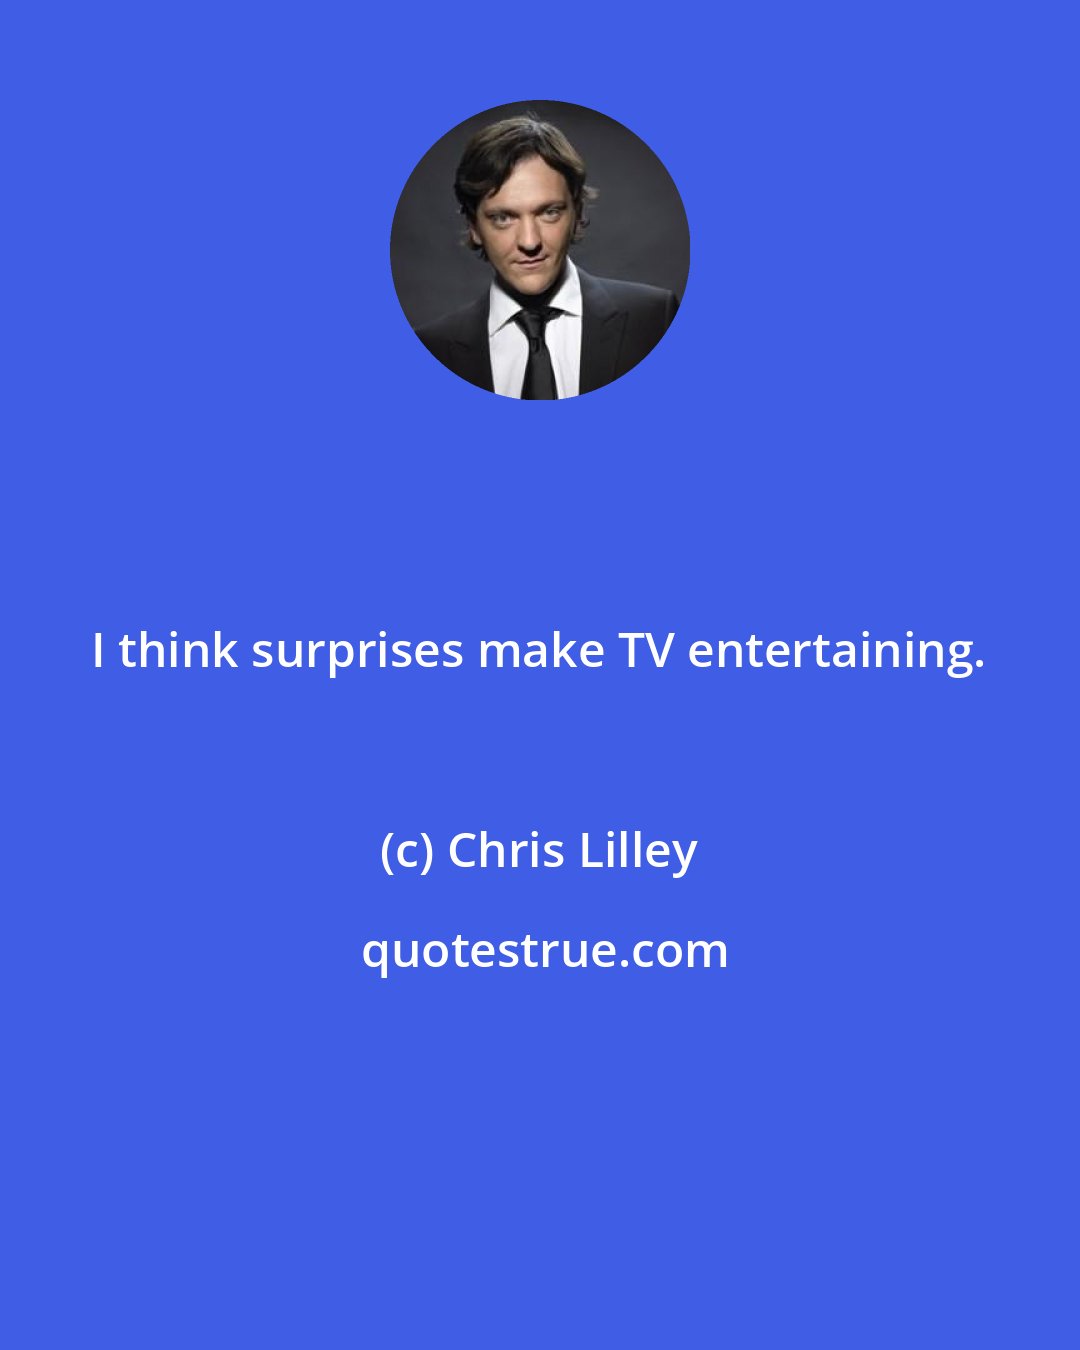 Chris Lilley: I think surprises make TV entertaining.